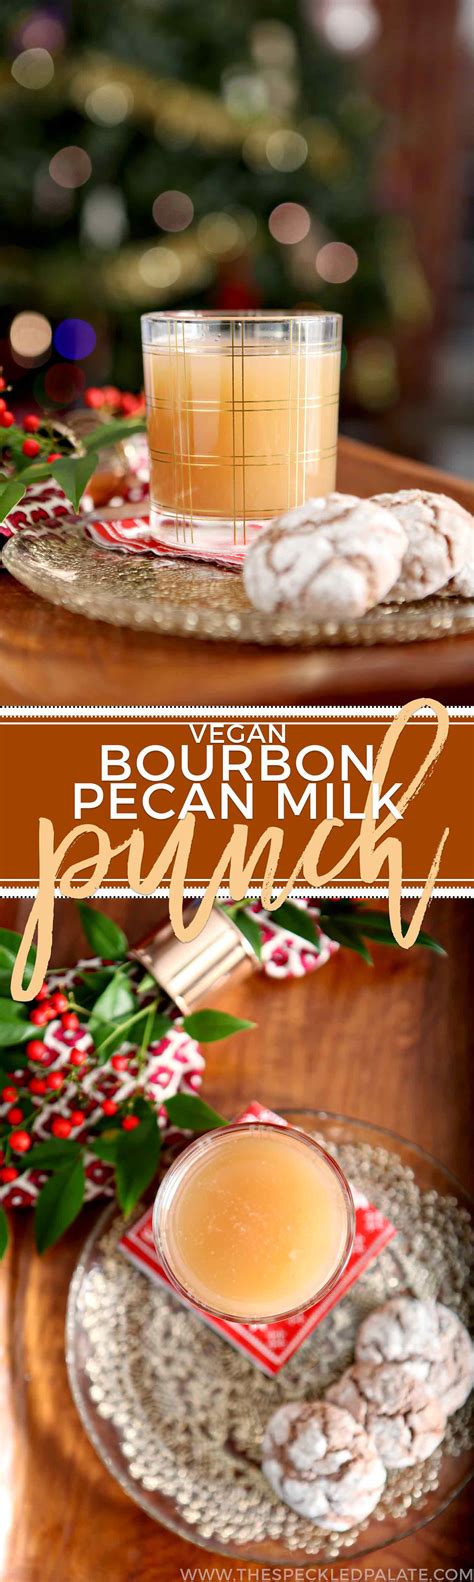 Red stag dirty shirley recipe. Vegan Bourbon Pecan Milk Punch | Recipe | Pecan milk, Easy ...